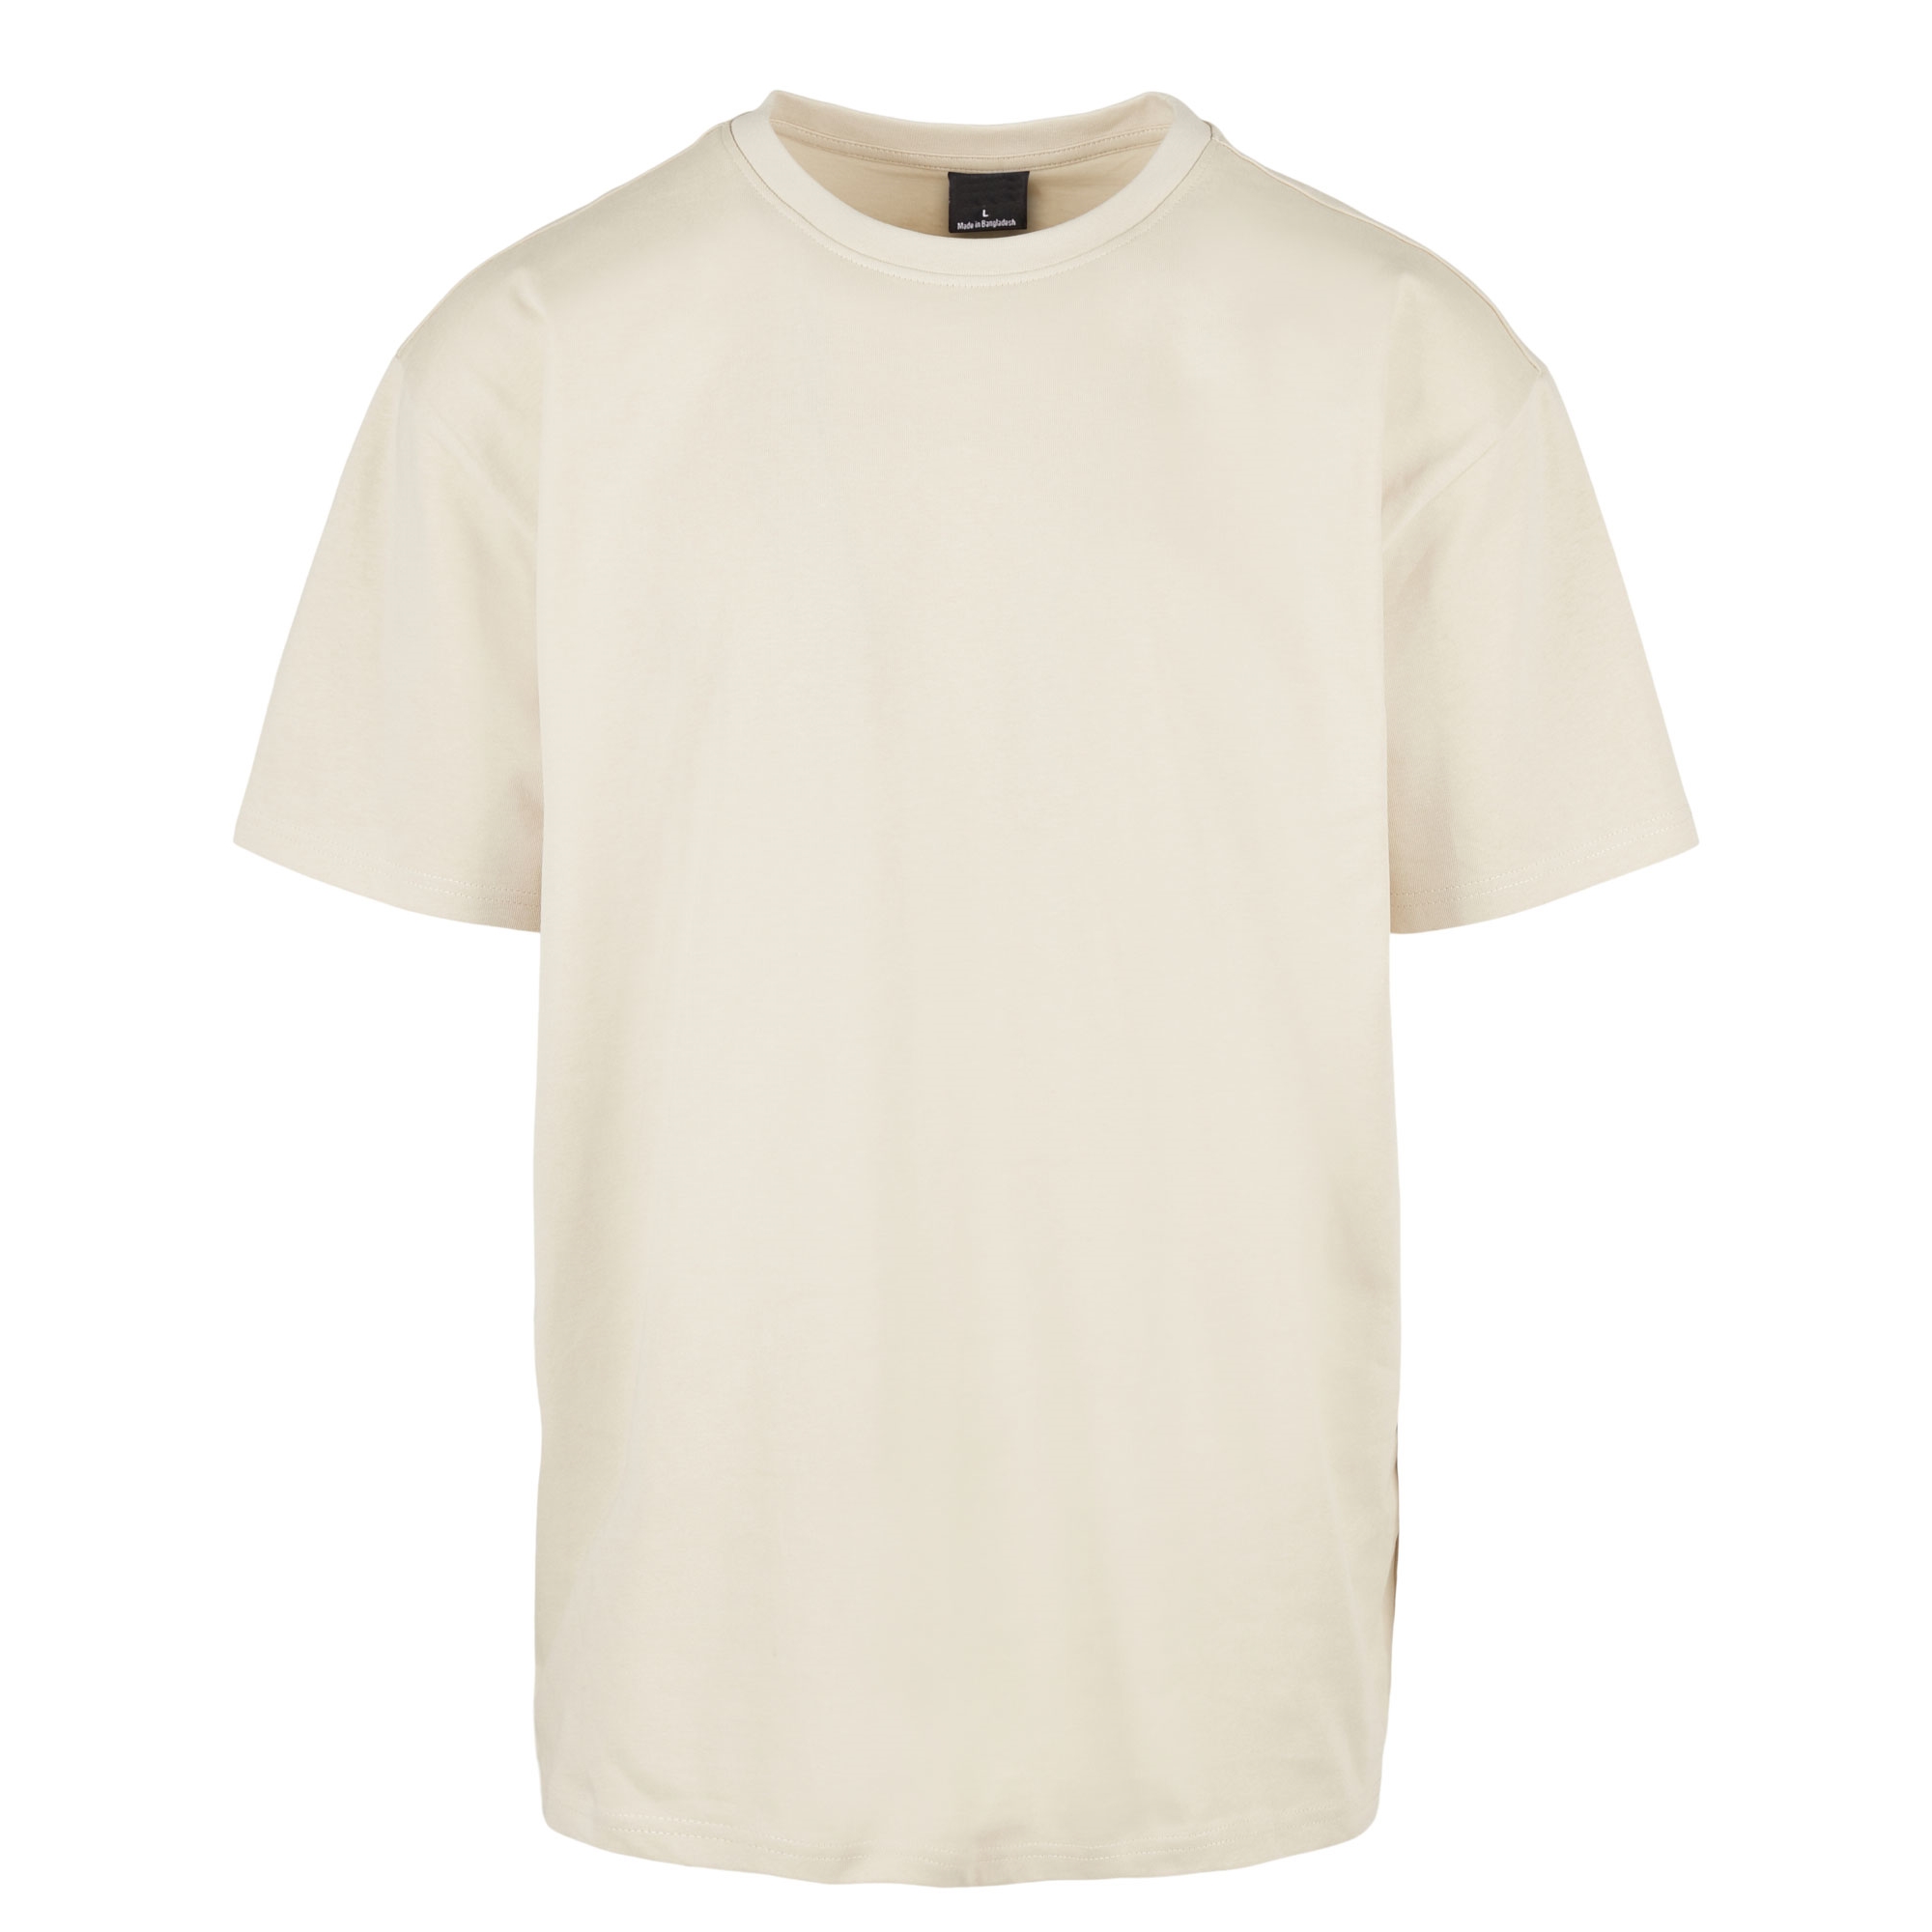 Urban Classic Herren T-Shirt Heavy Oversized Long Tee Rundhals Extra Lang  XS-5XL | eBay